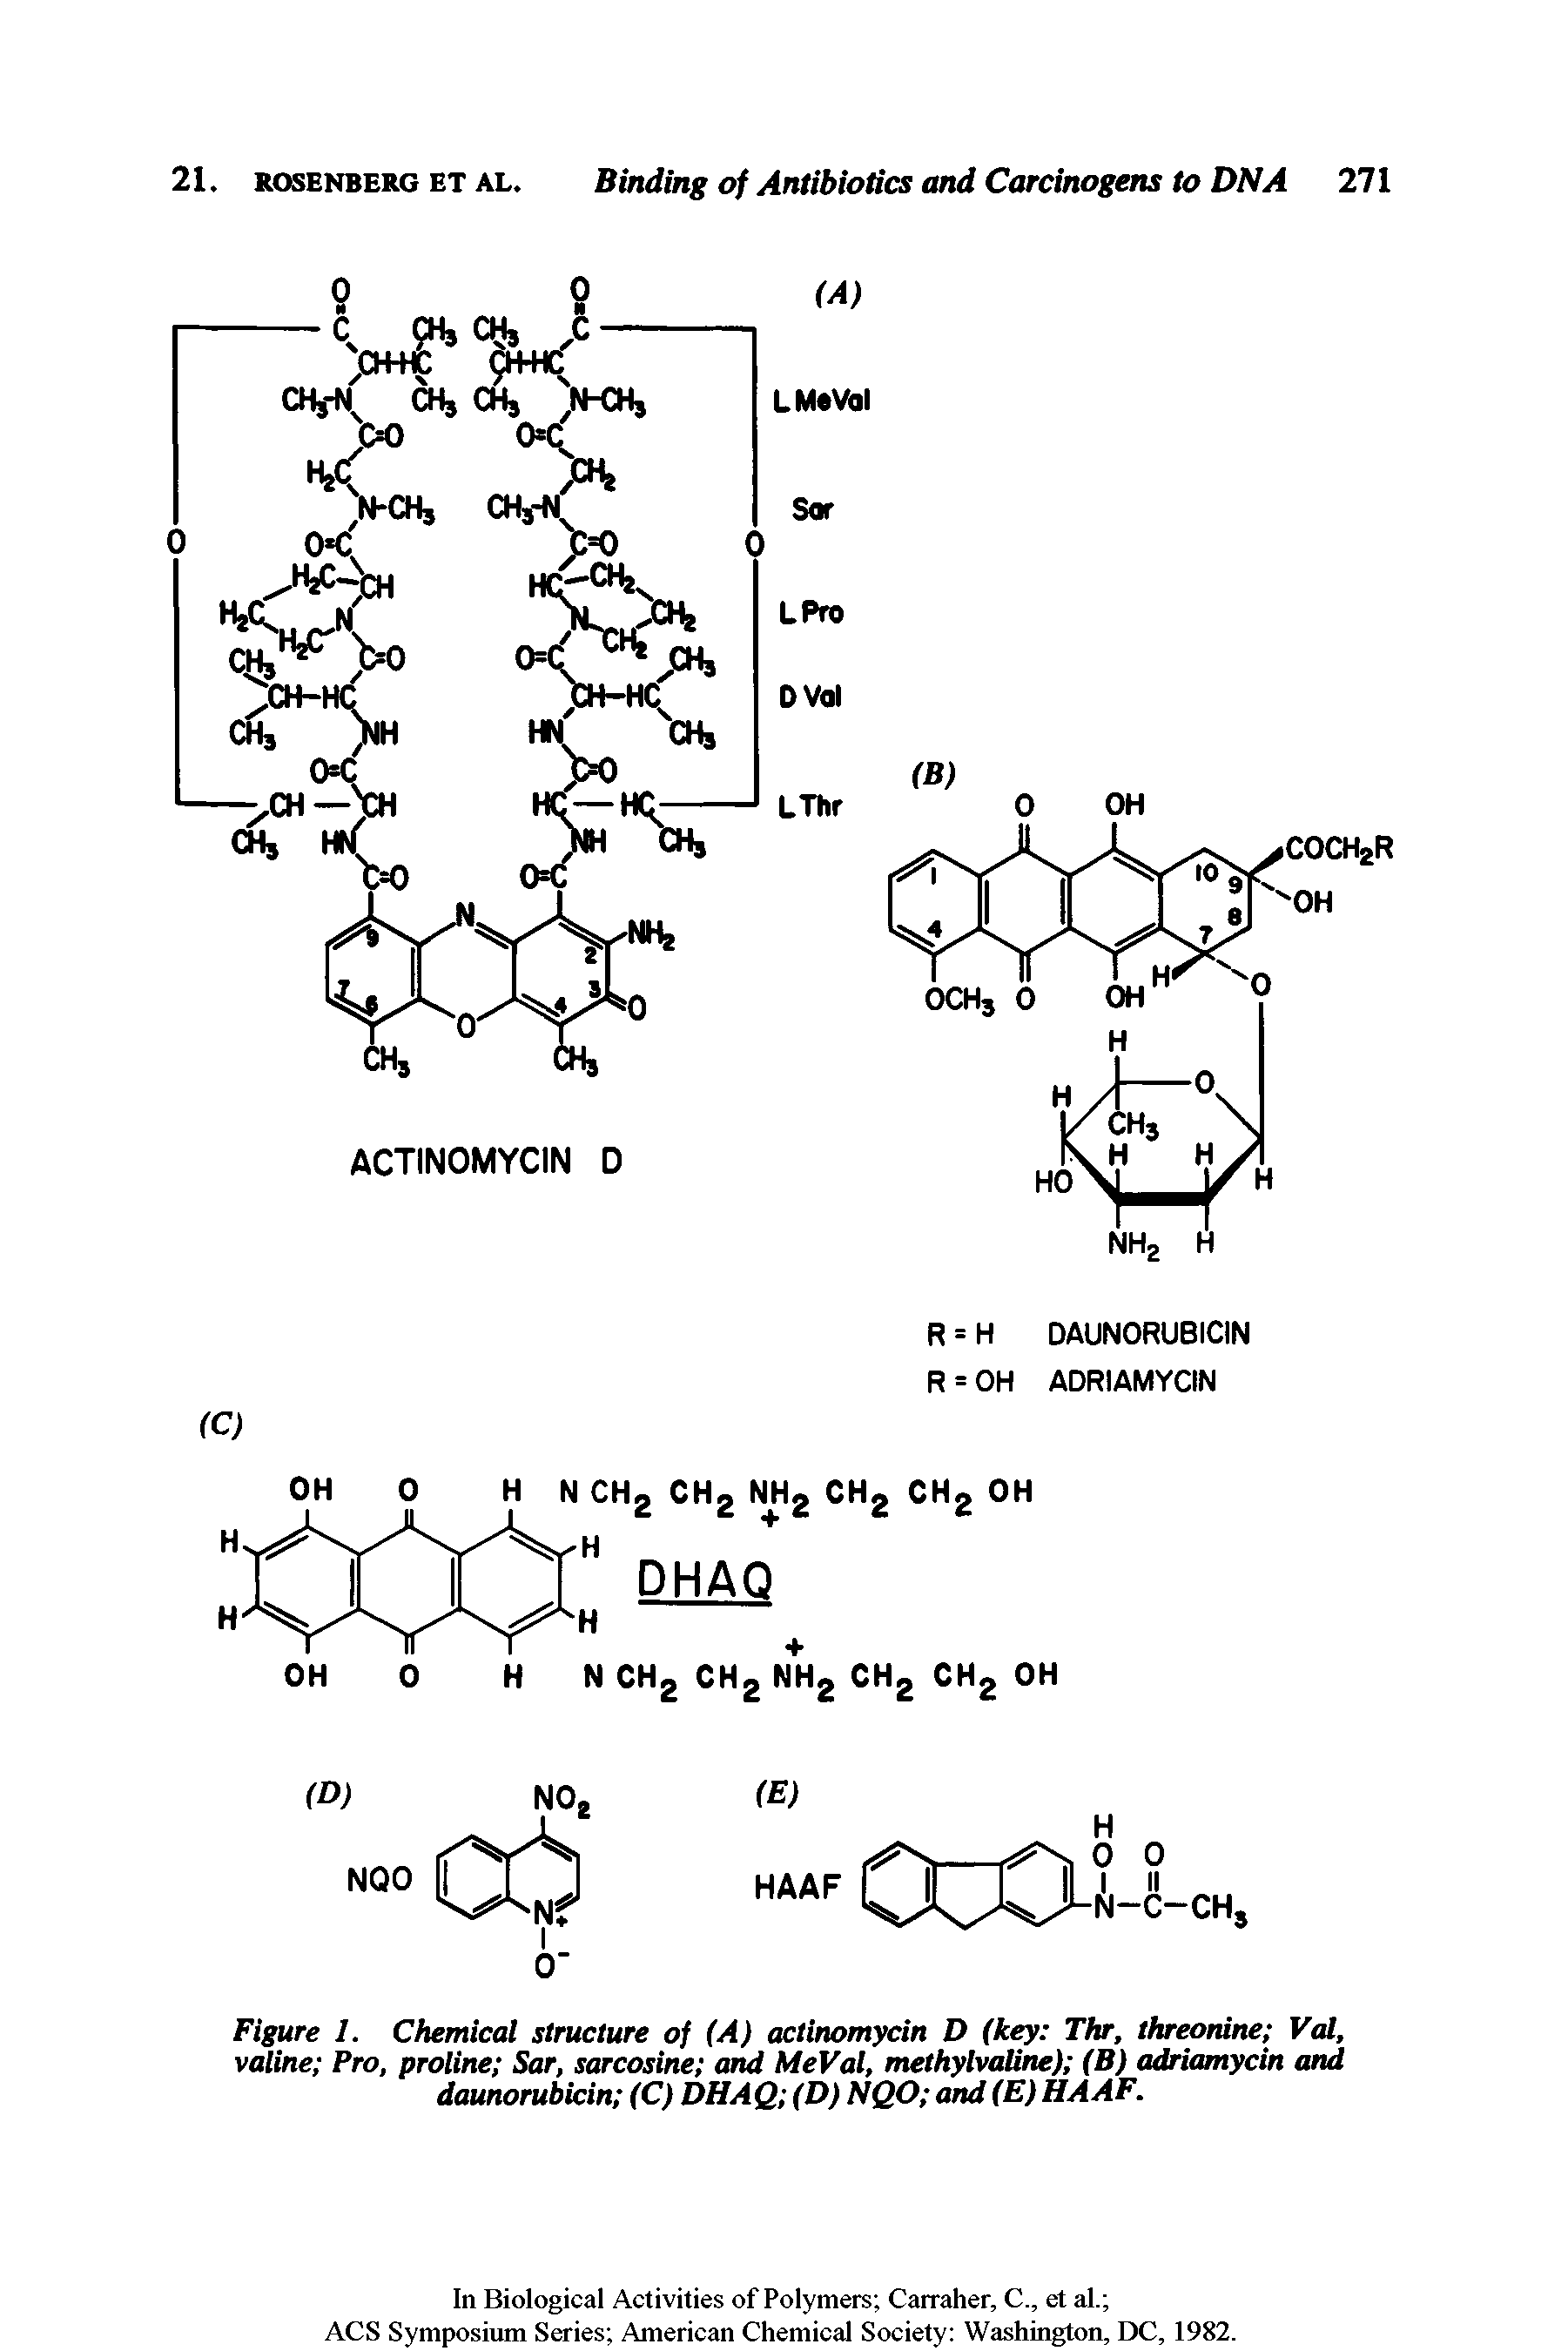 Figure 1. Chemical structure of (A) actinomycin D (key Thr, threonine Val, valine Pro, proline Sar, sarcosine and MeFal, methylvaline) (B) adriamycin and daunorubicin (C) DHAQ (D) NQO and (E) HAAF.